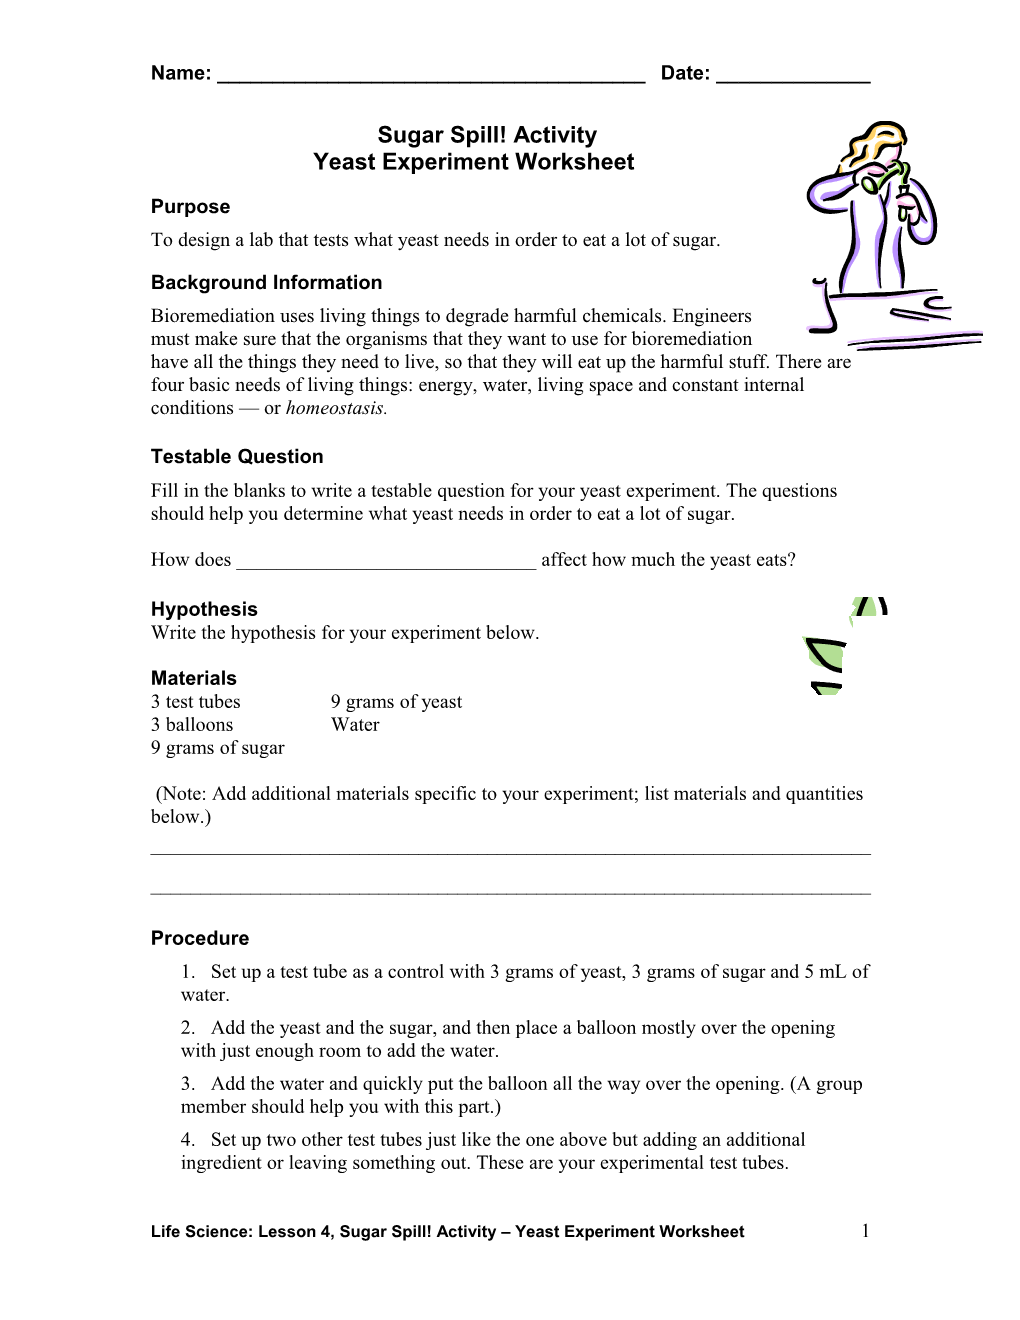 Yeast Experimentworksheet